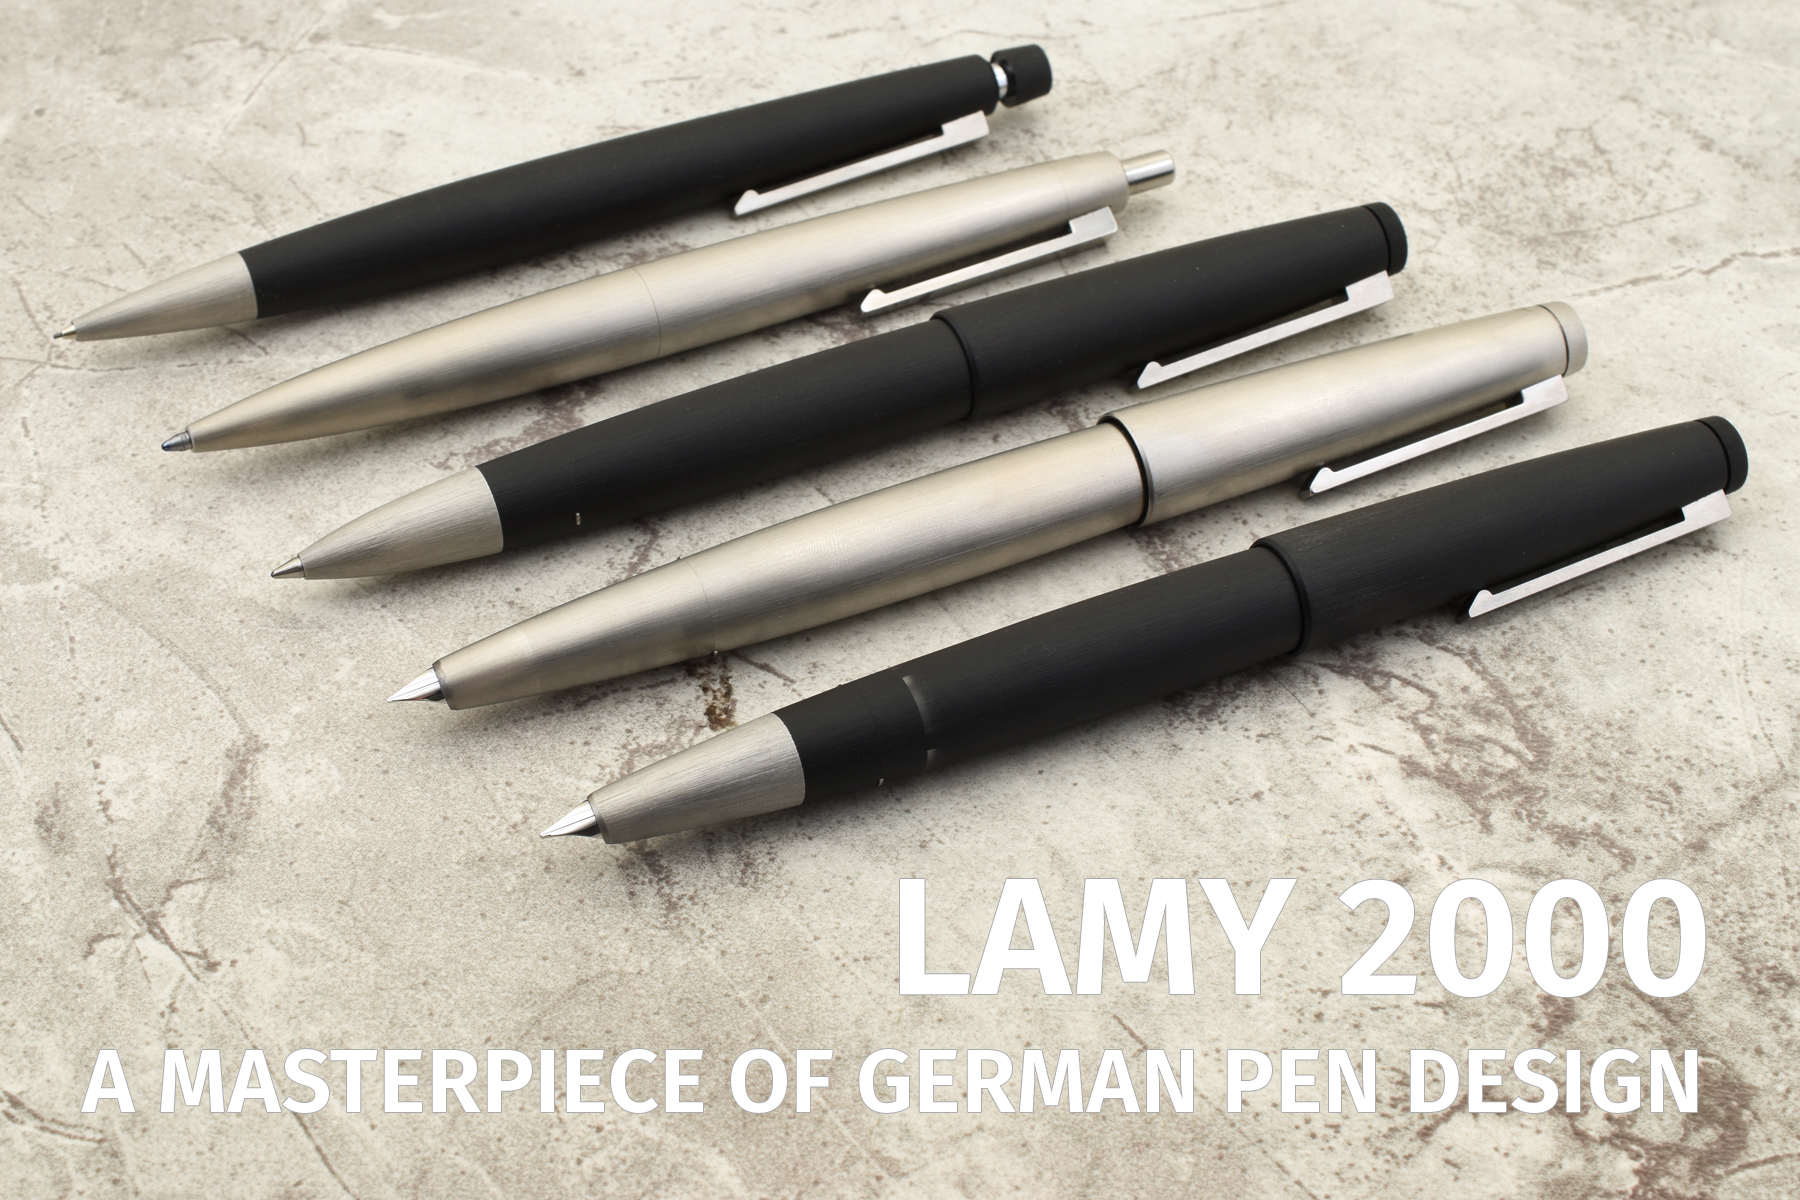 The LAMY 2000: A Masterpiece of German Pen Design